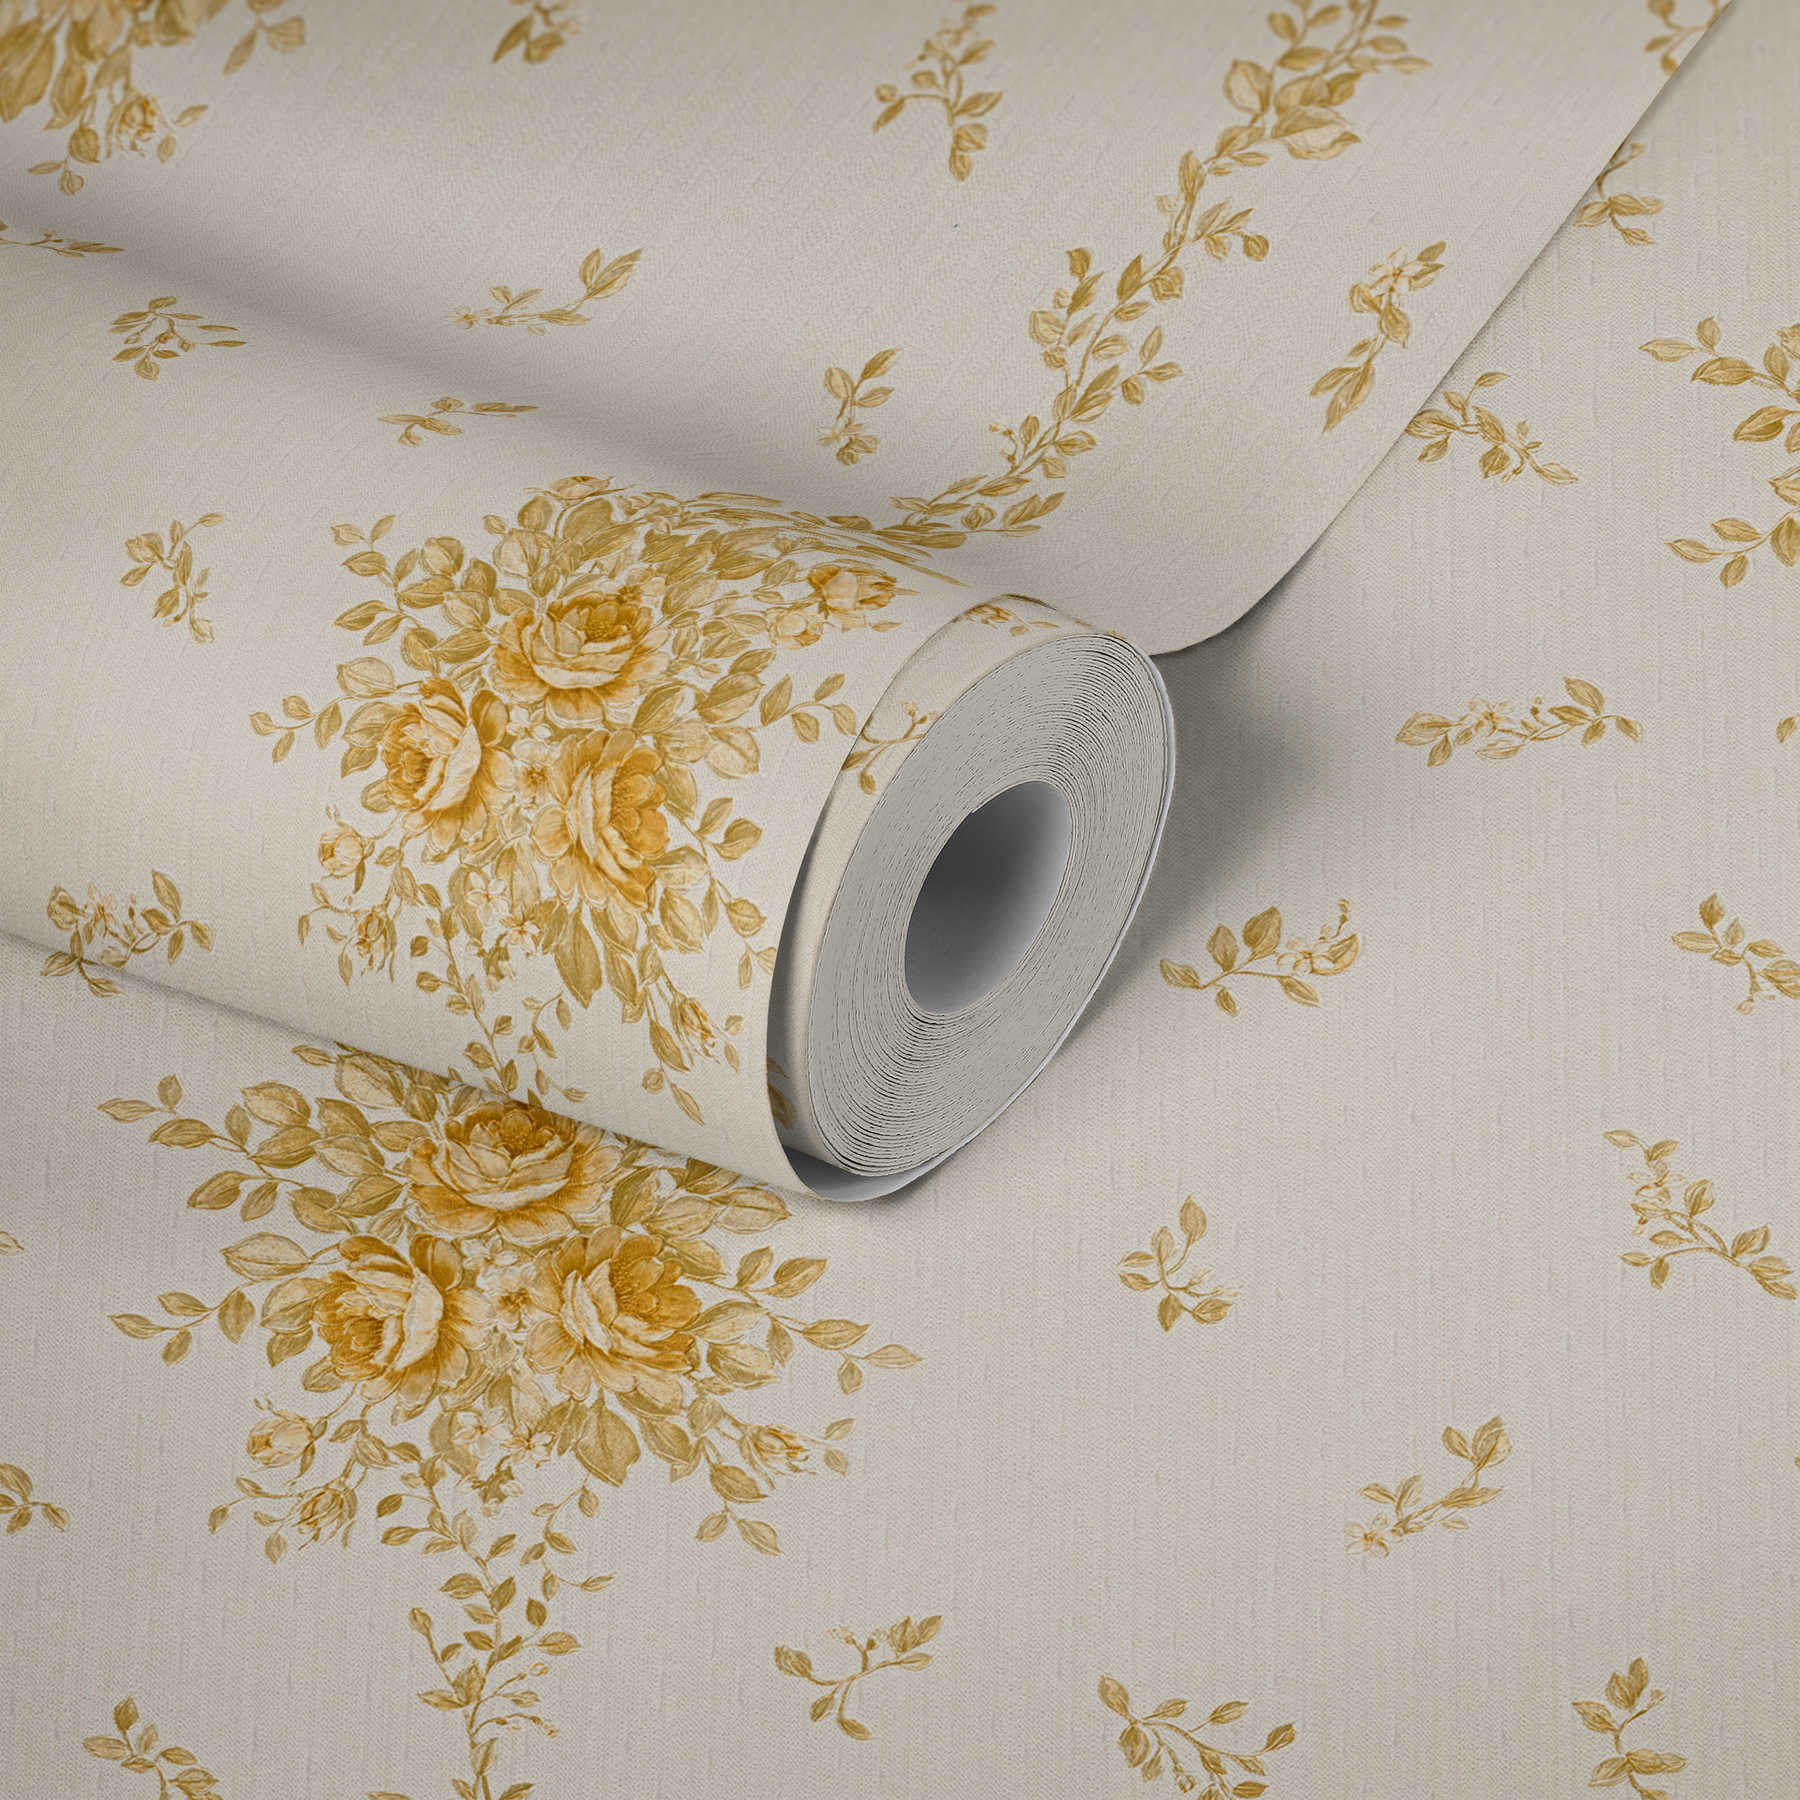             Floral wallpaper floral pattern in metallic gold - cream
        